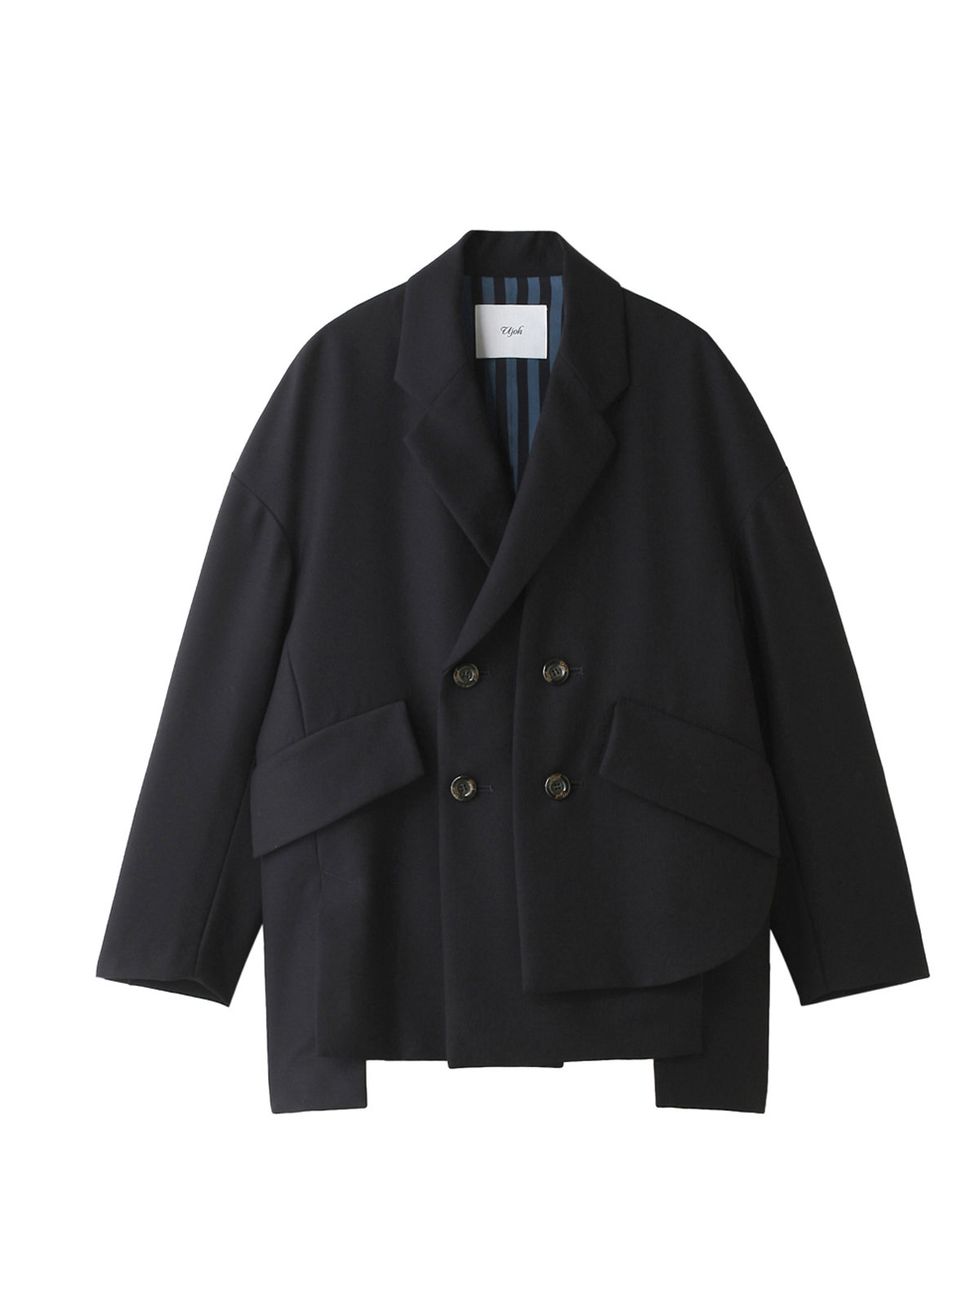 Collar, Sleeve, Coat, Textile, Outerwear, Uniform, Blazer, Fashion, Black, Electric blue, 